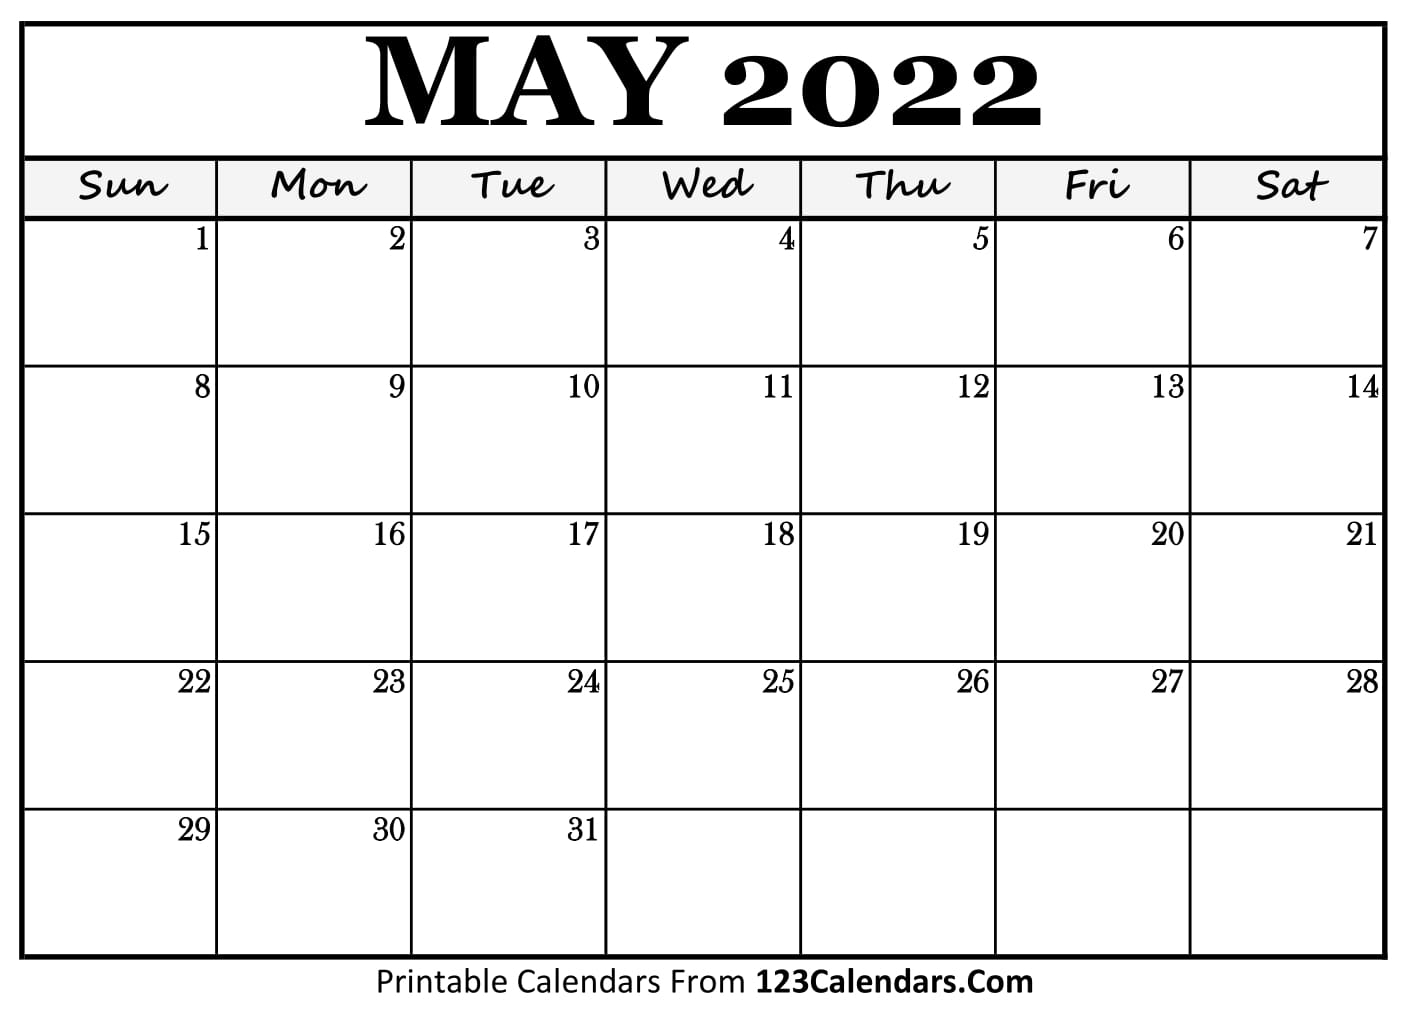 Print May Calendar 2022 Printable May 2022 Calendar Templates - 123Calendars.com